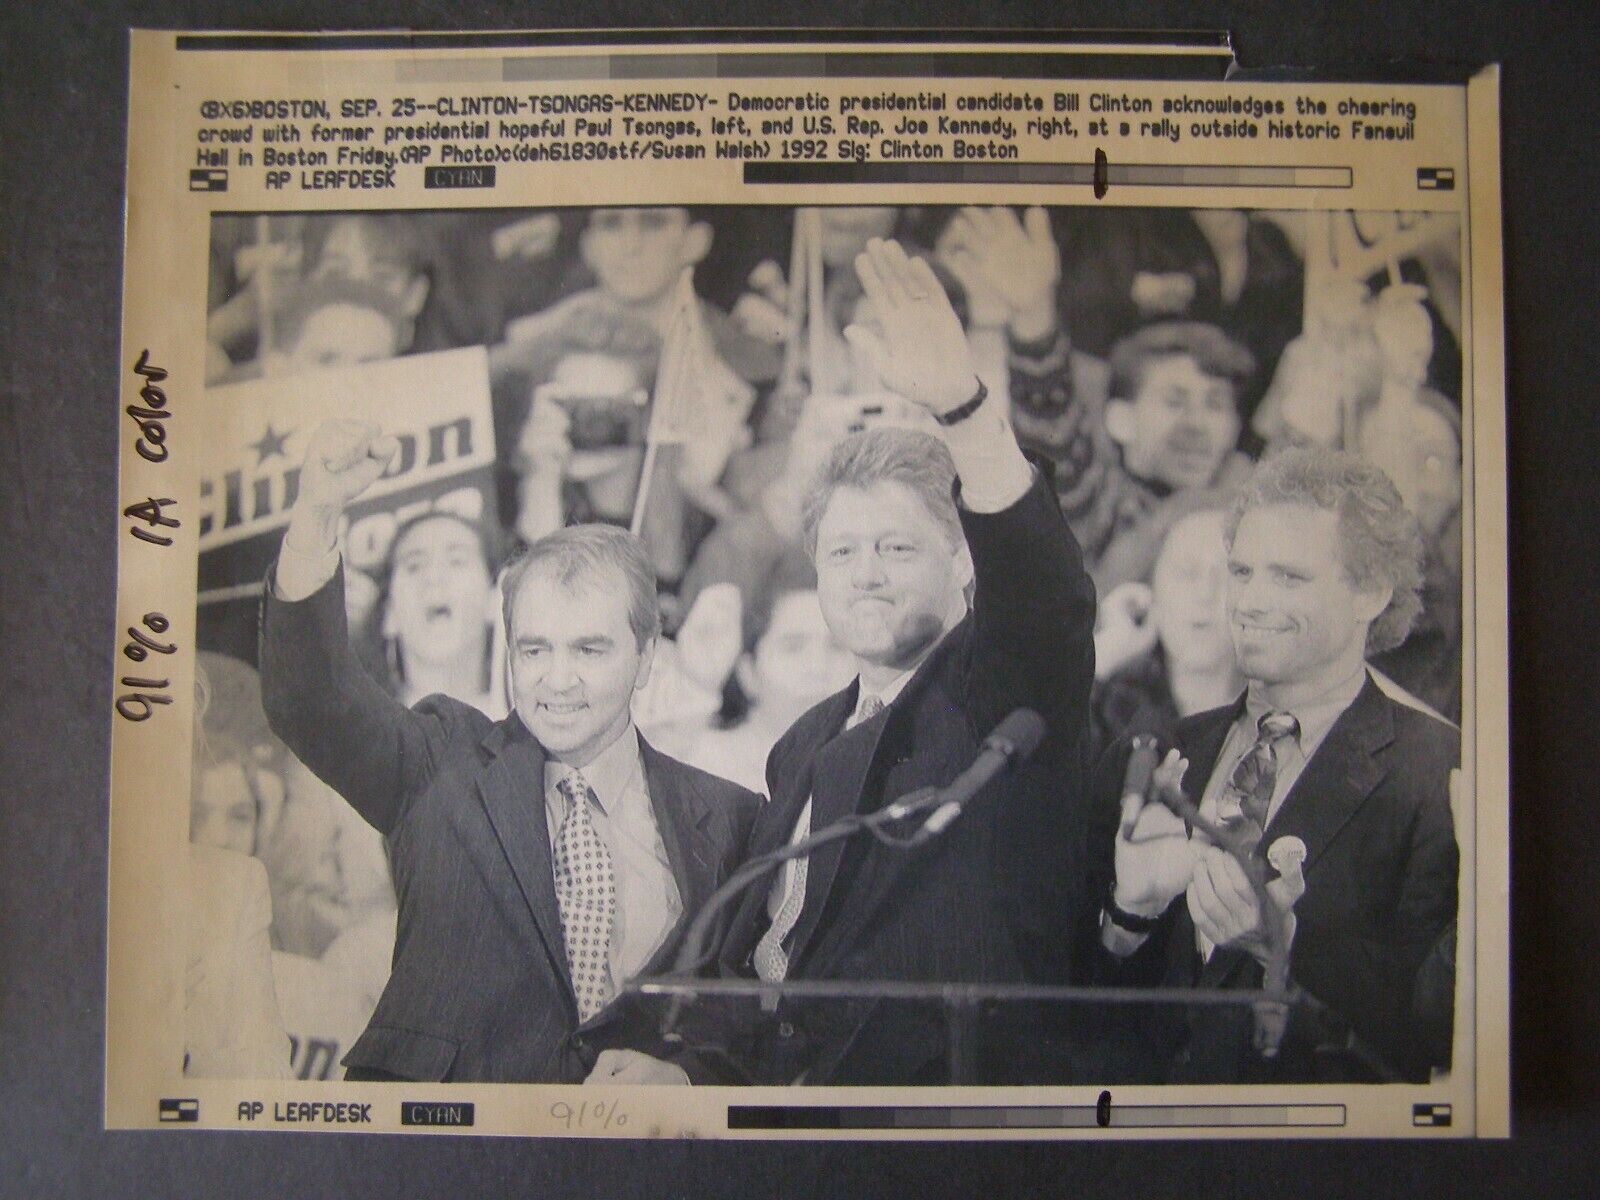 AP Wire Press Photo 1992 Presidential Candidate Bill Clinton Joe Kennedy Tsongas